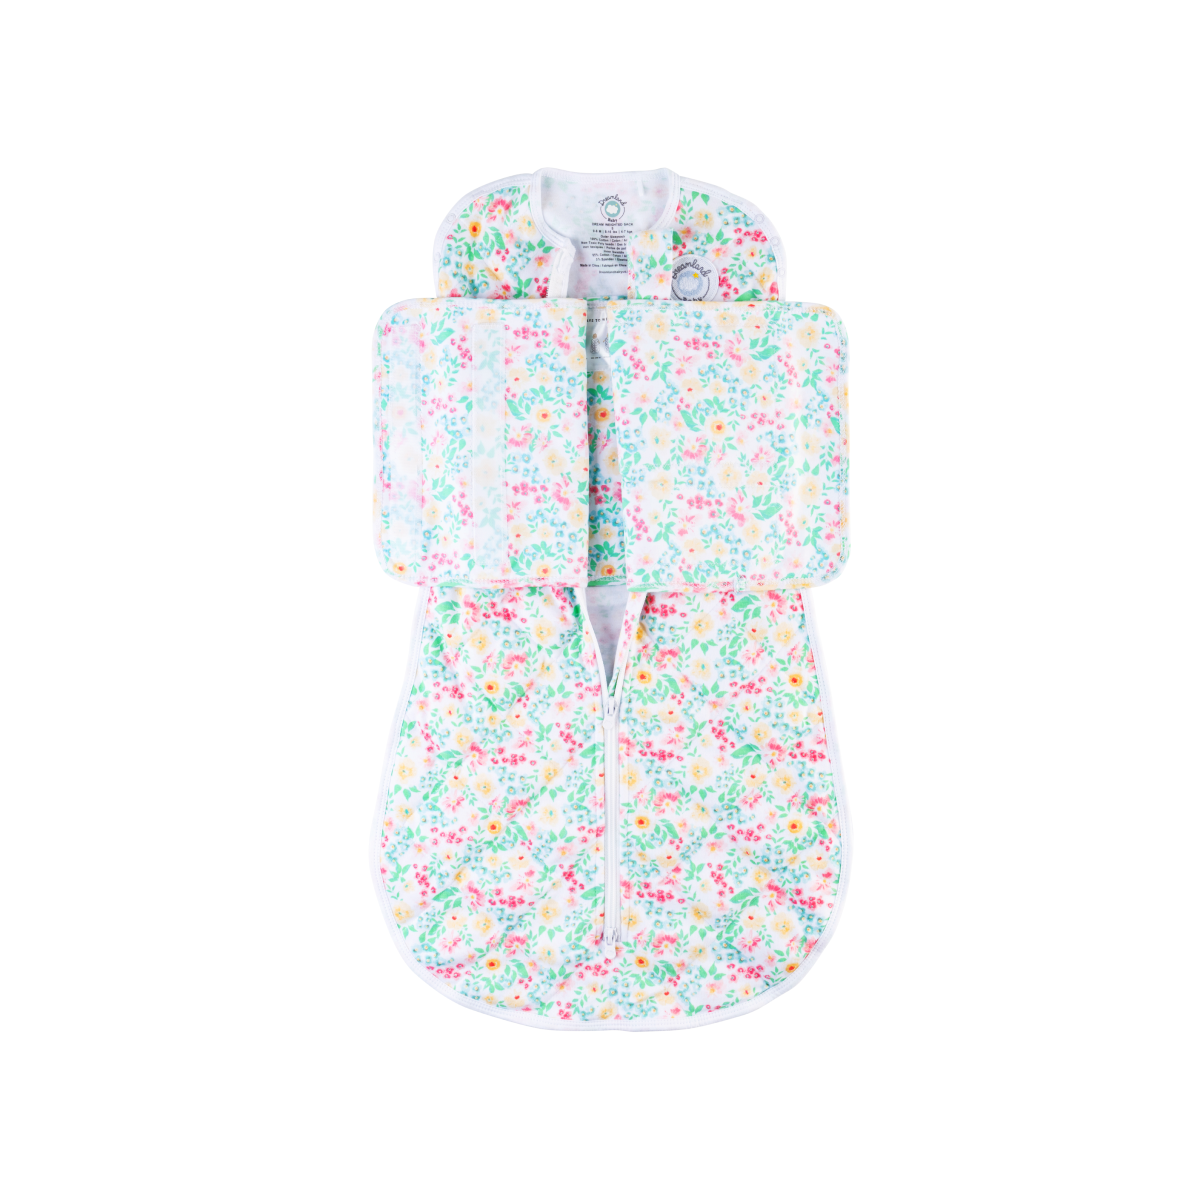 Baby Swaddle Blankets Wraps for Newborn Boy and Girl, 0-3 Months,  Small/medium, Aqua/Grey 